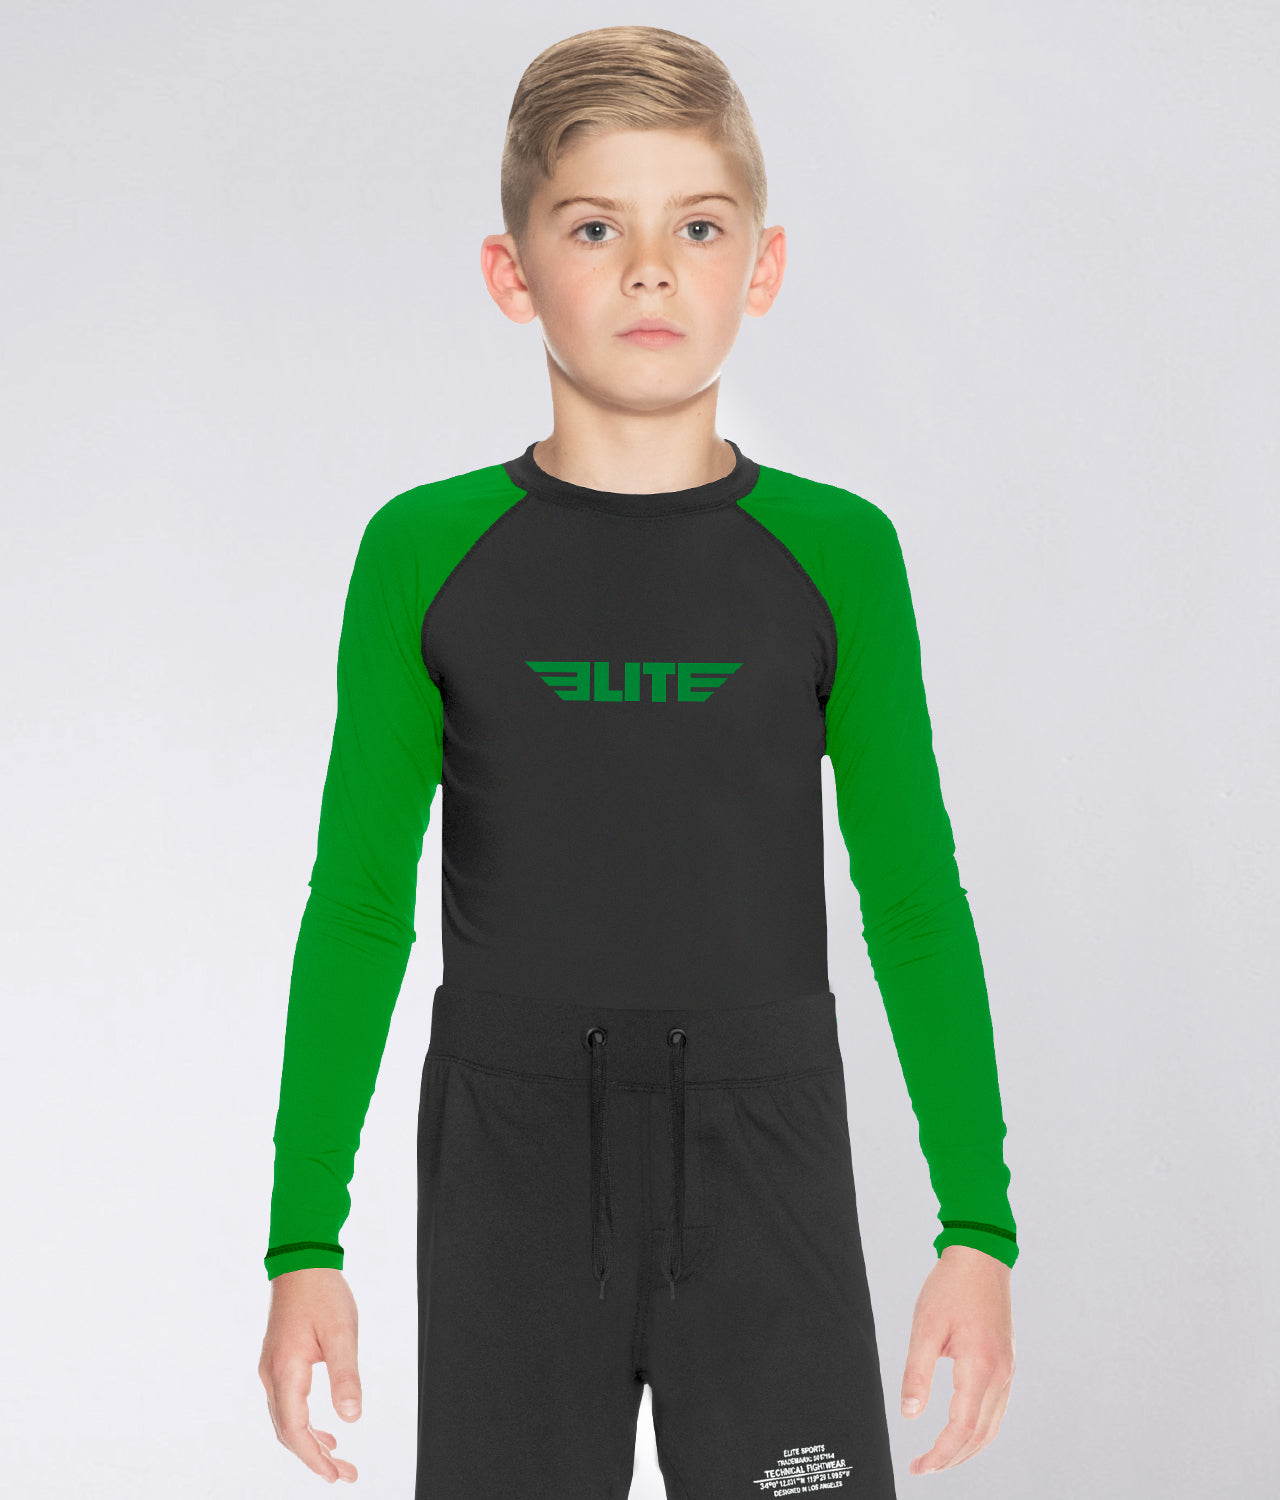 Elite Sports Kids' Standard Green Long Sleeve Wrestling Rash Guard